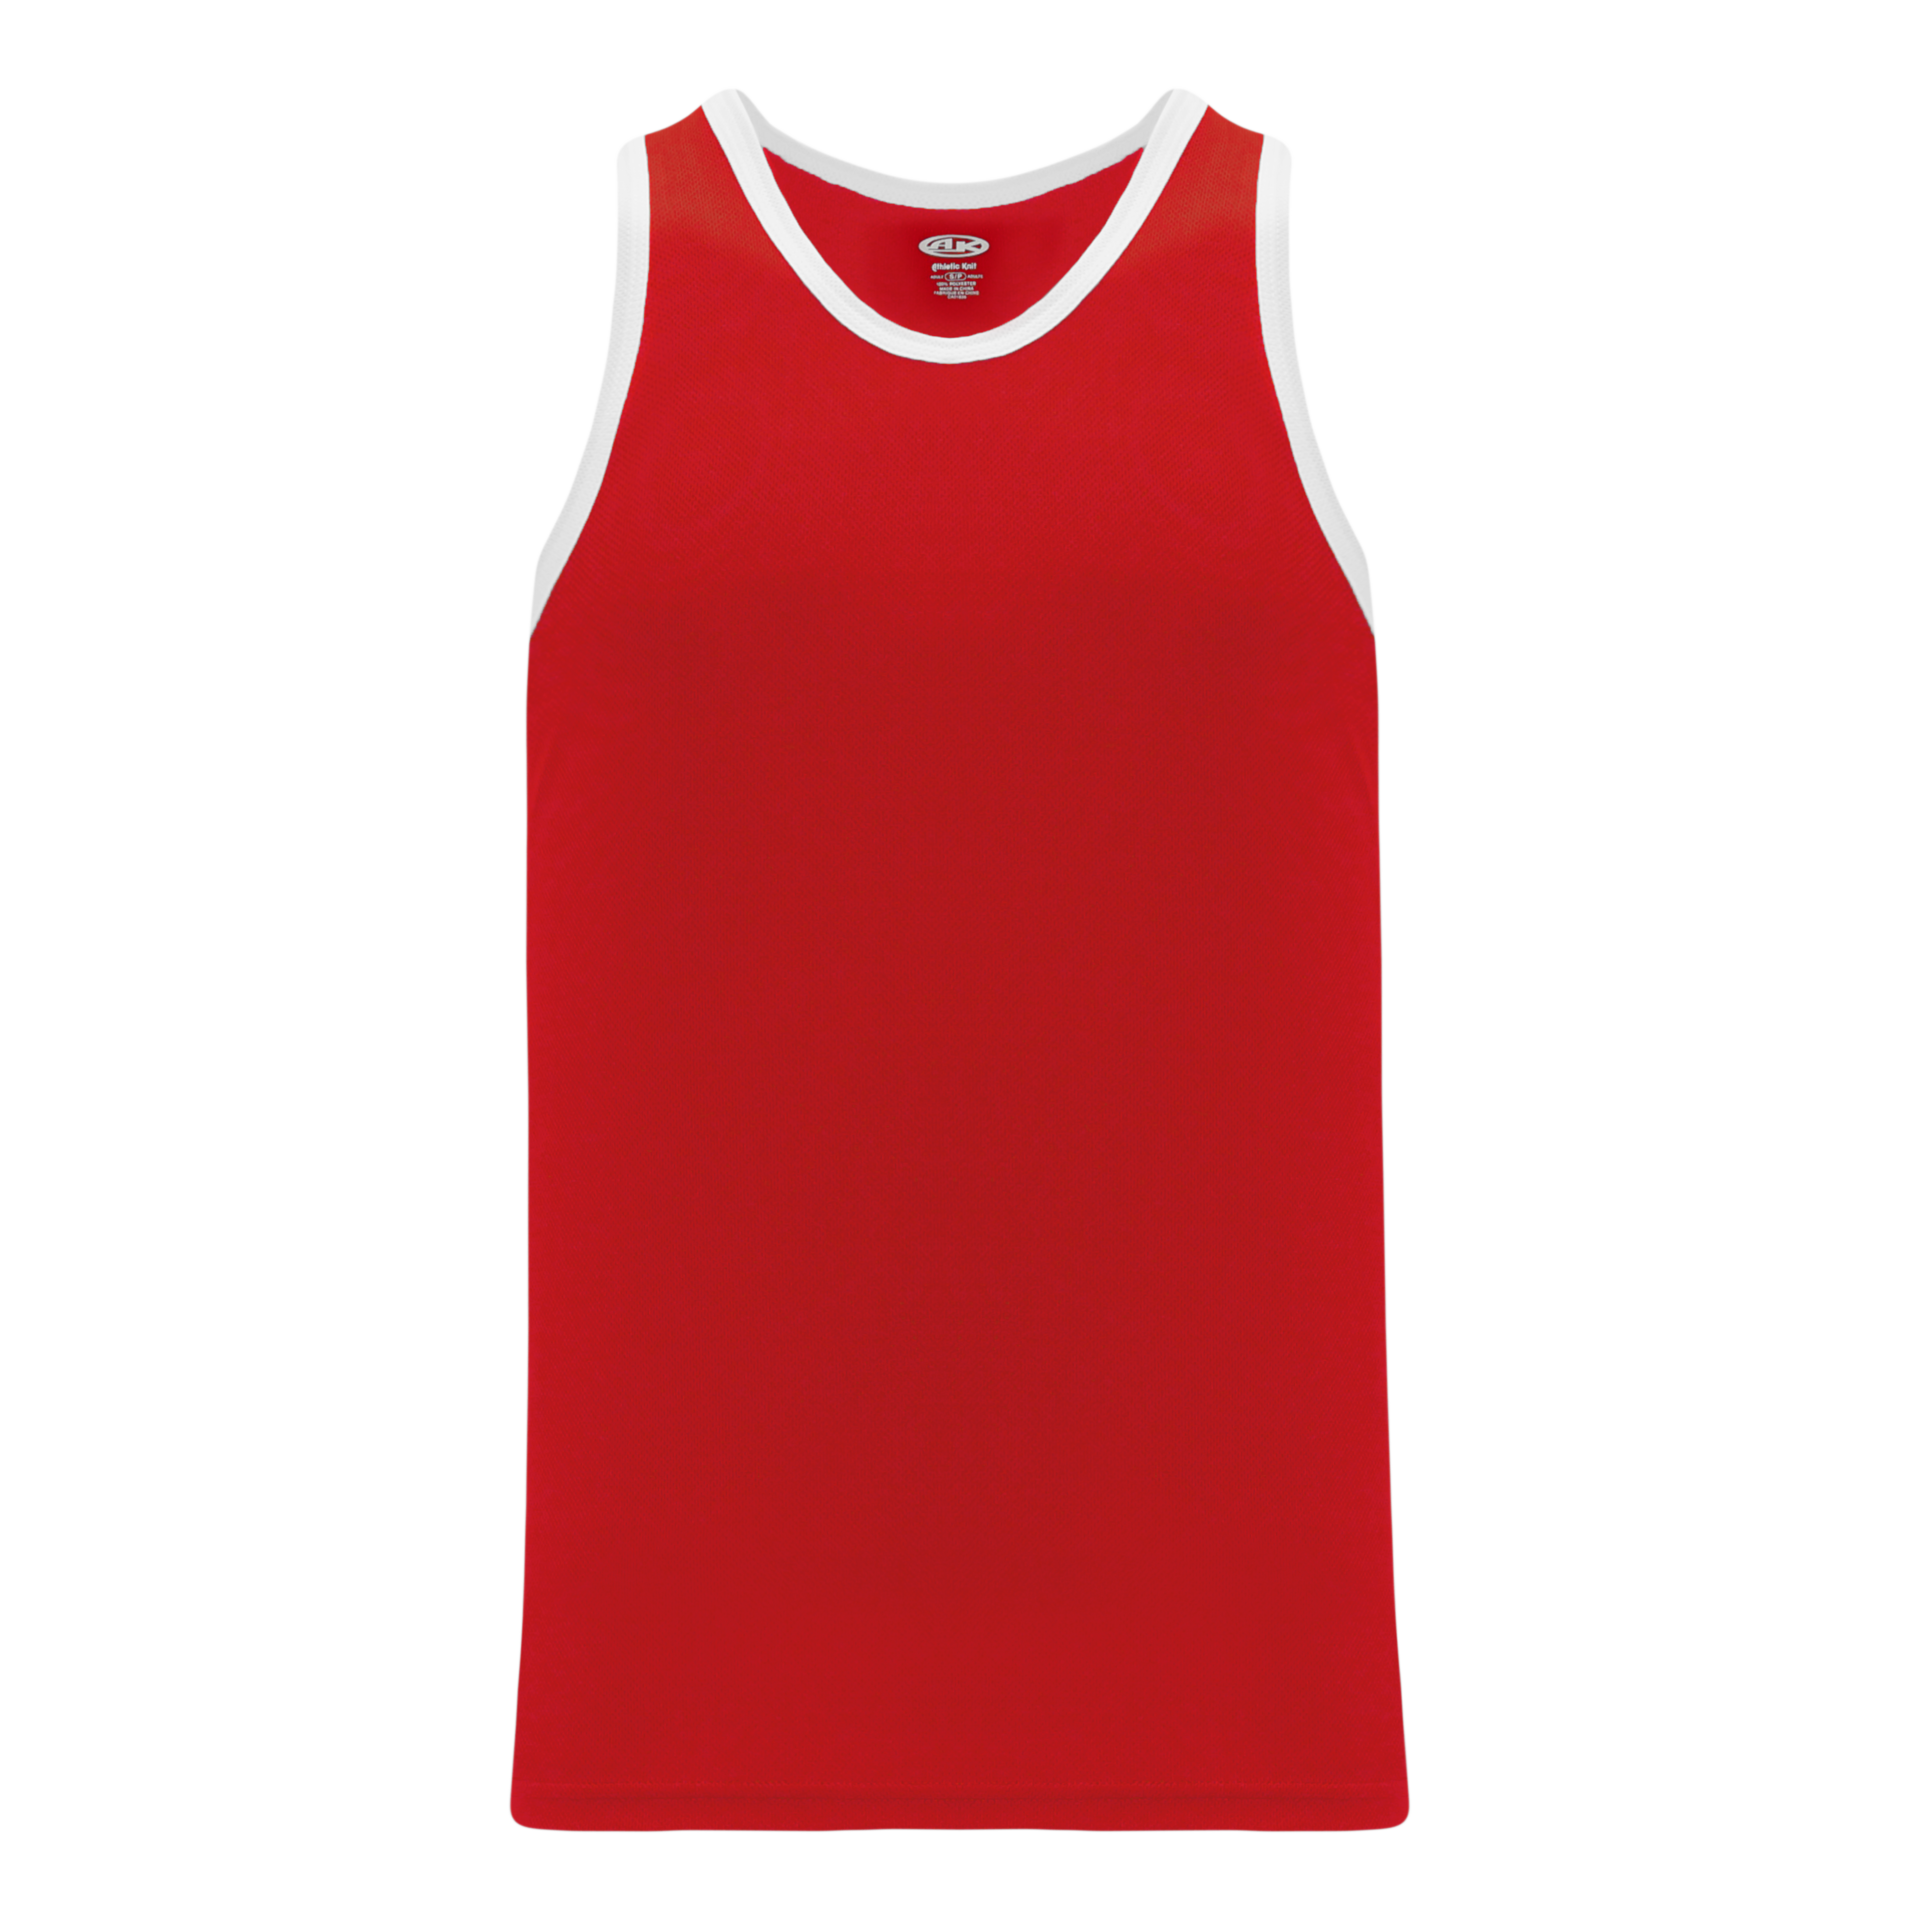 BASKETBALL – Simple Jersey